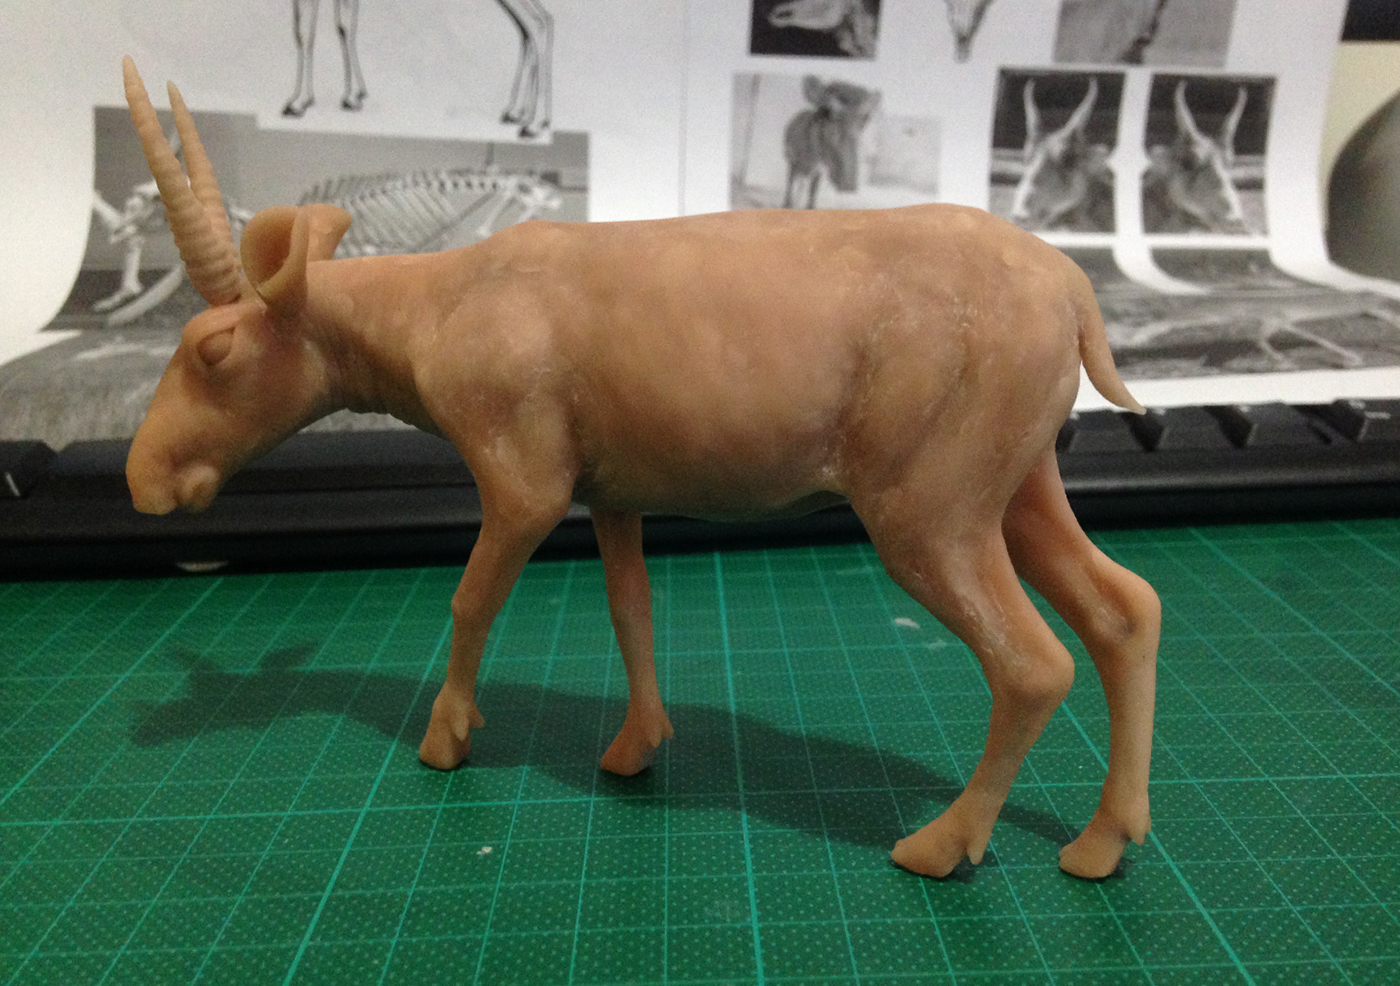 Sculpt sculpture clay animals painting   resin 雕塑 動物模型